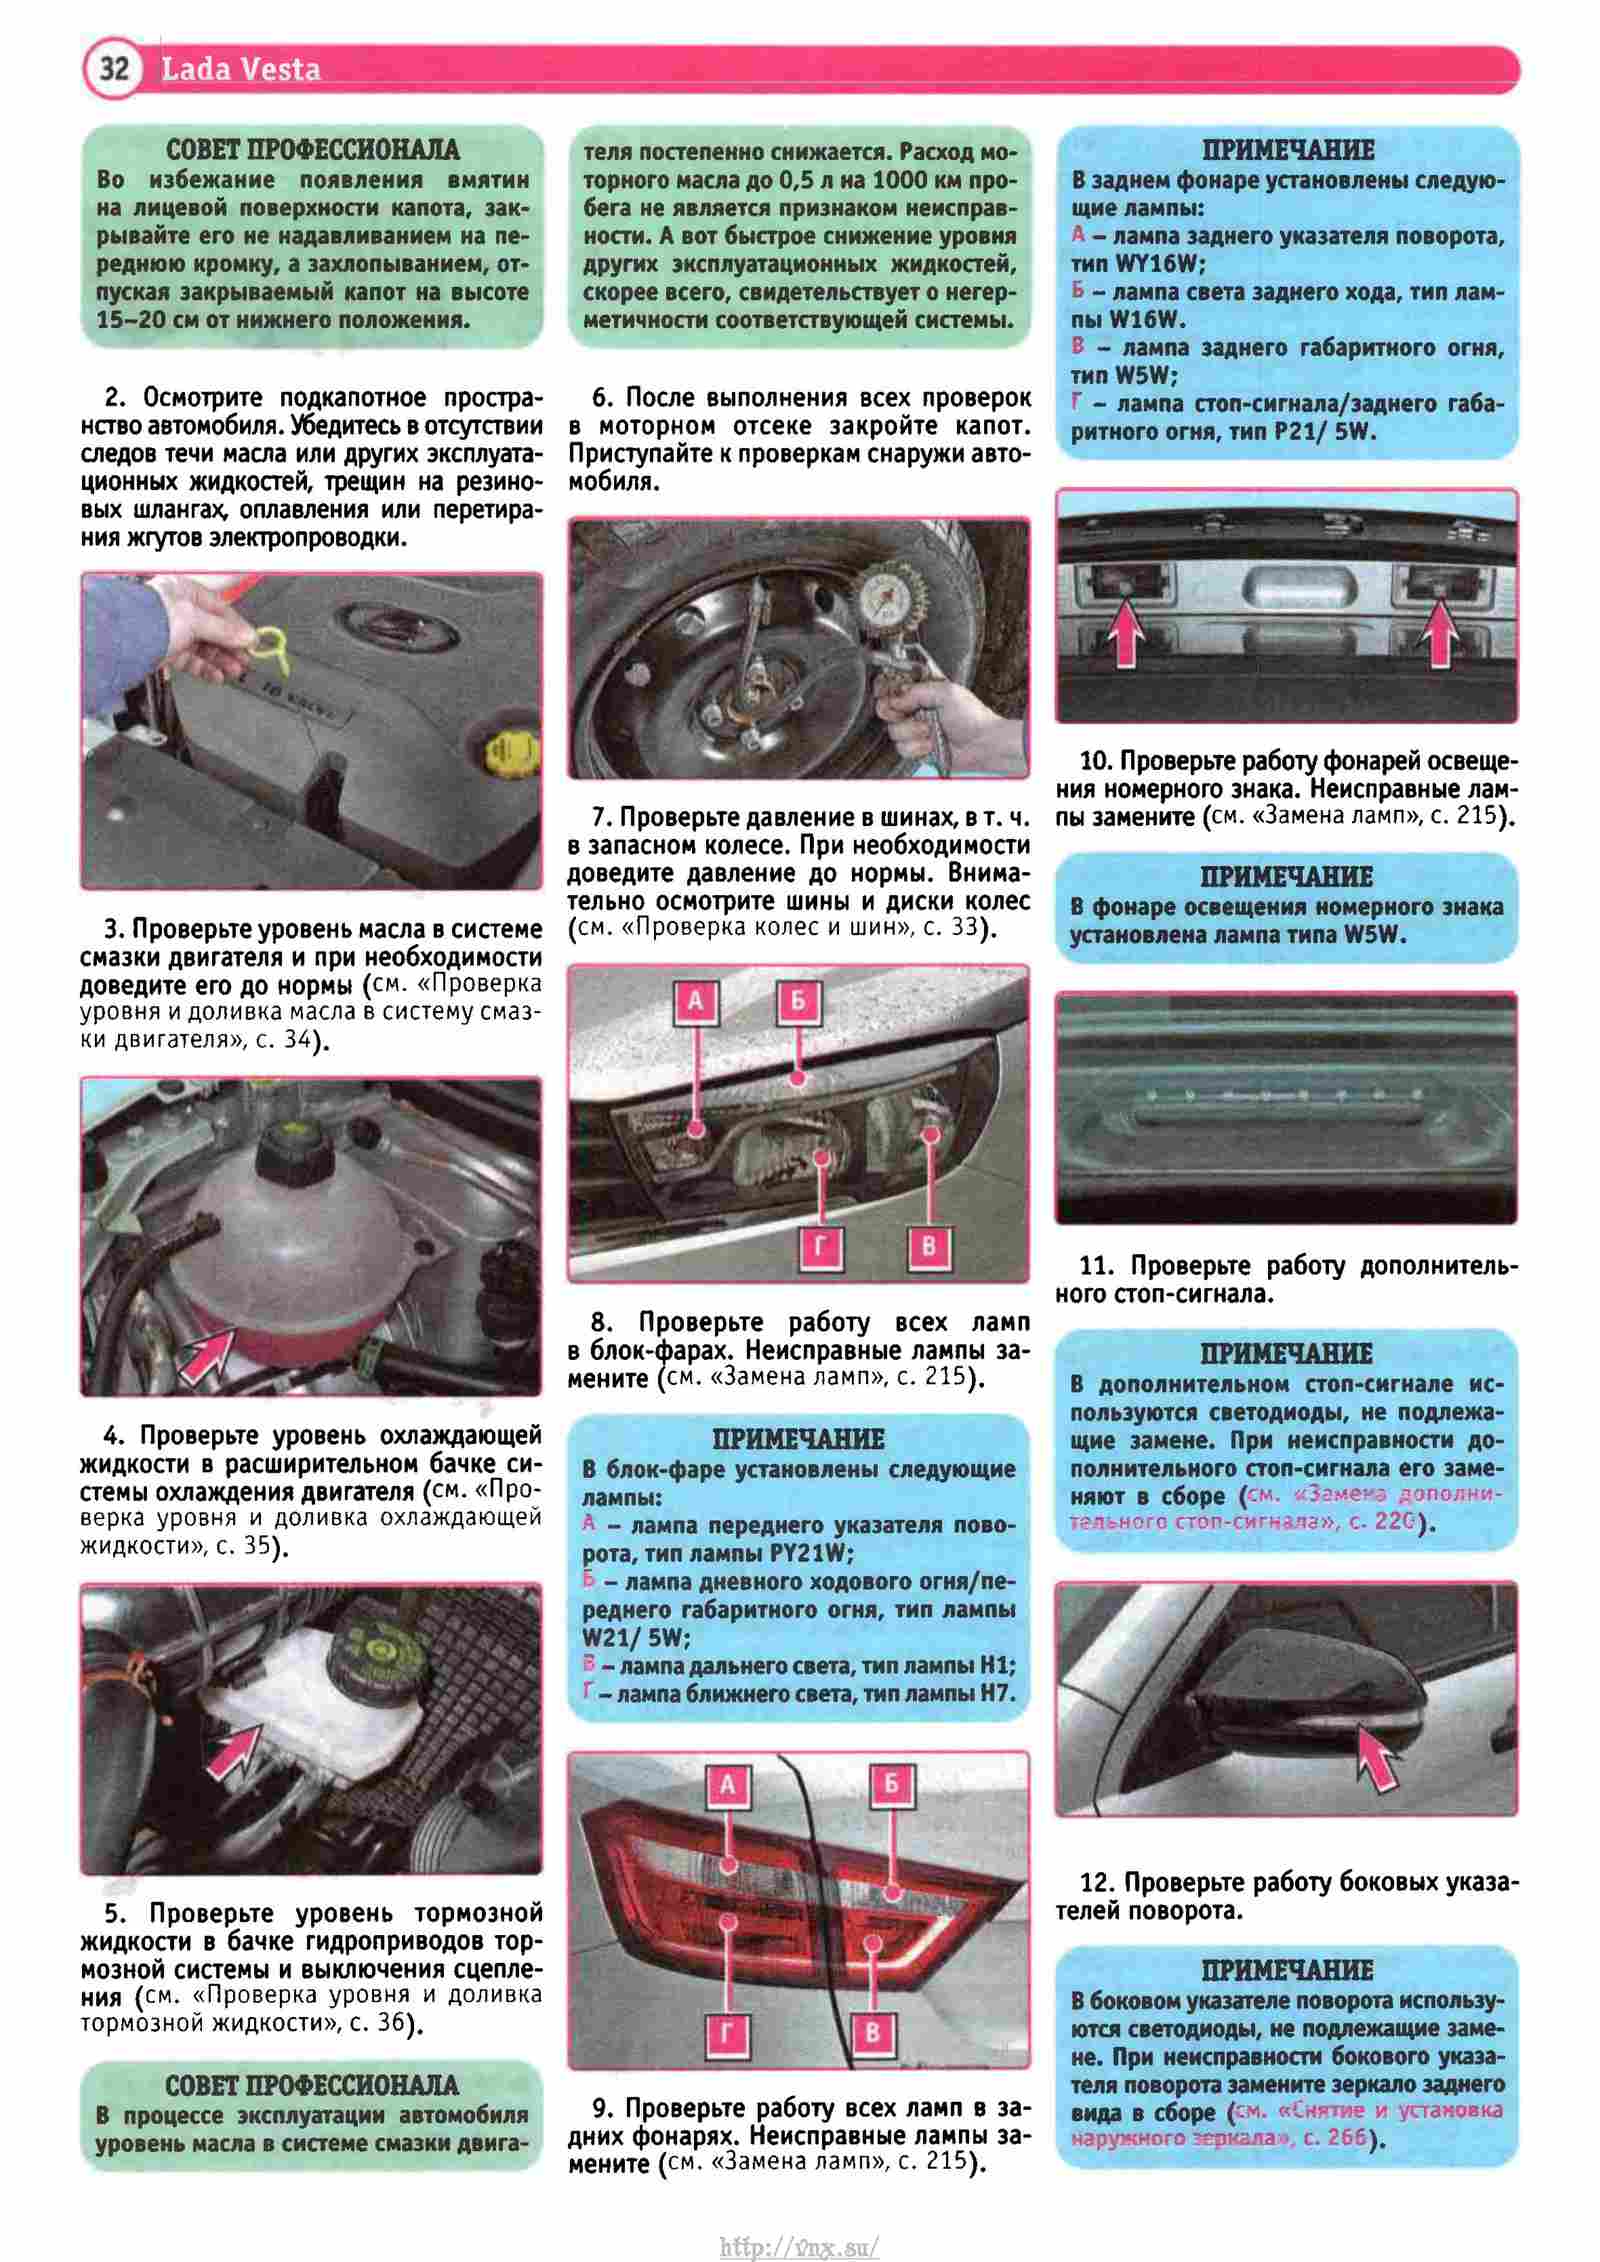 Онлайн руководство по ремонту lada vesta / ваз веста с 2015 года